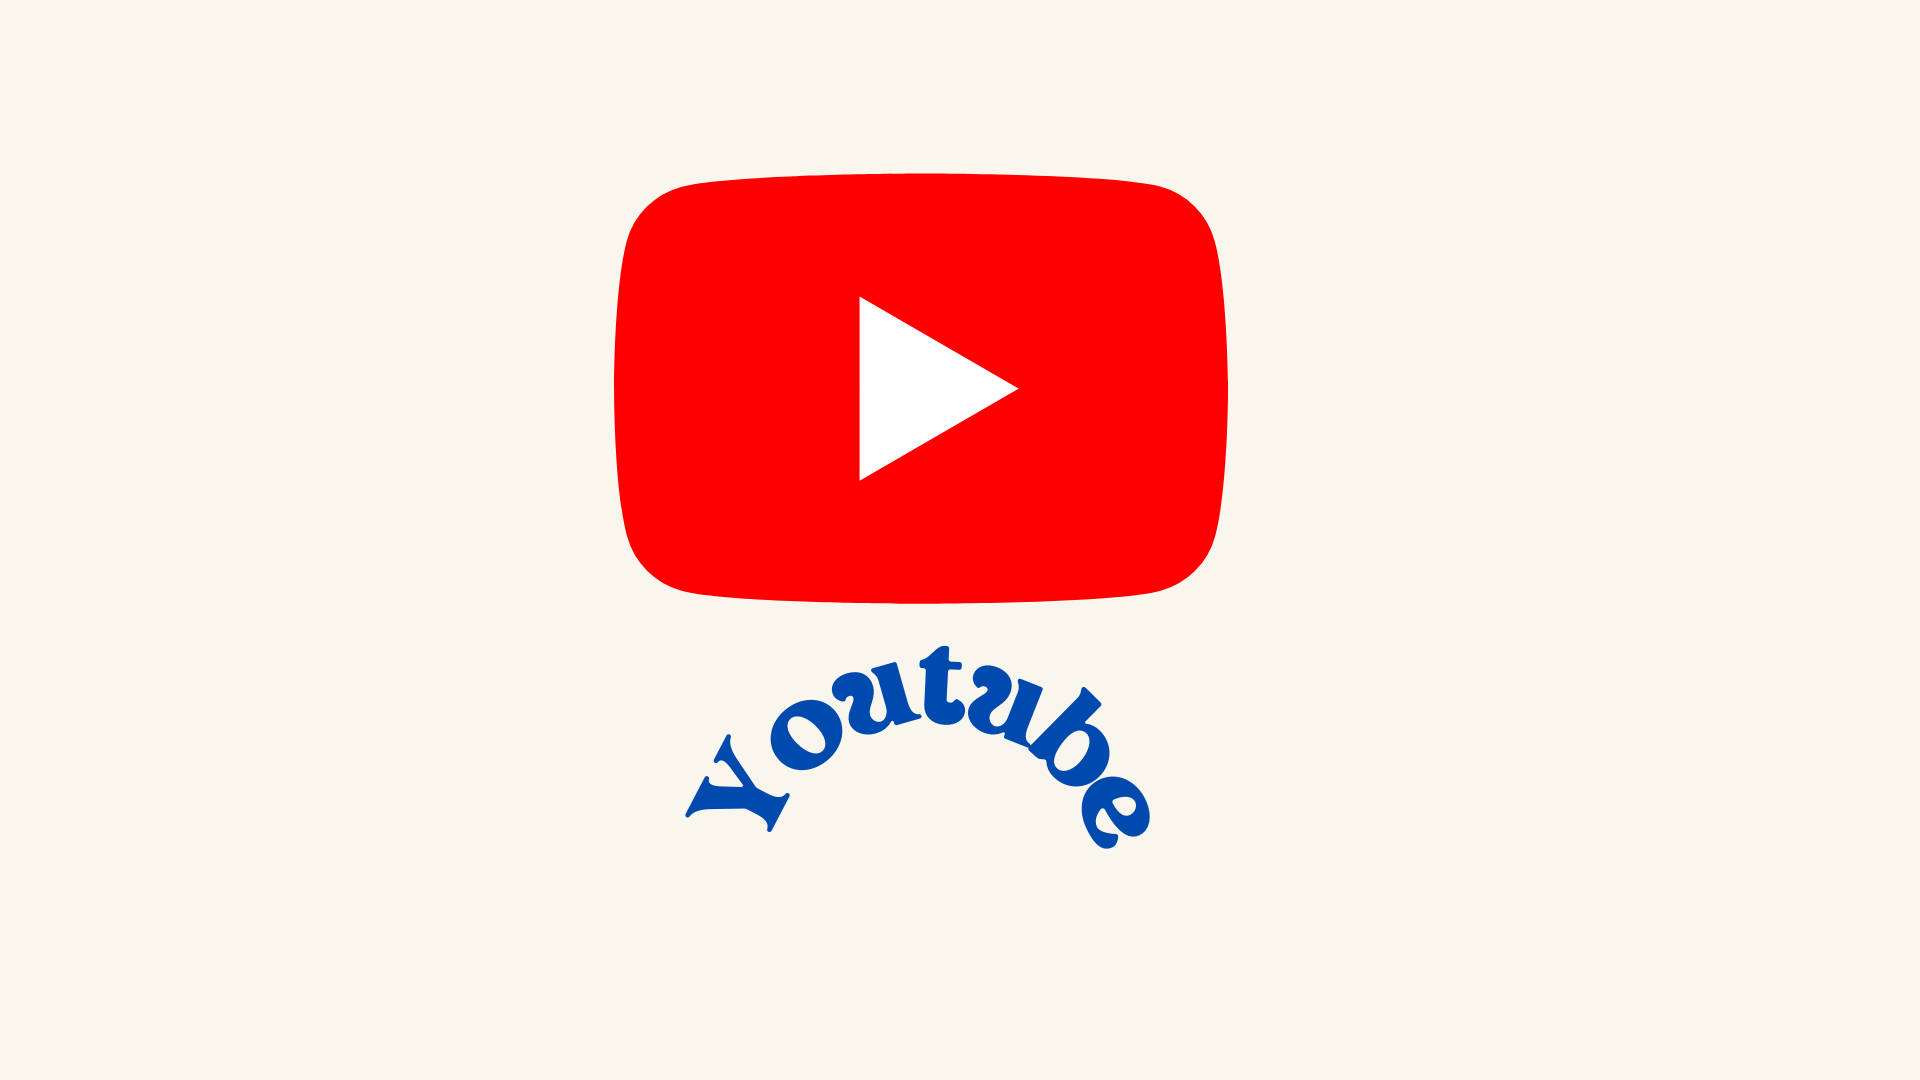 Youtube Logo In Retro-style Background